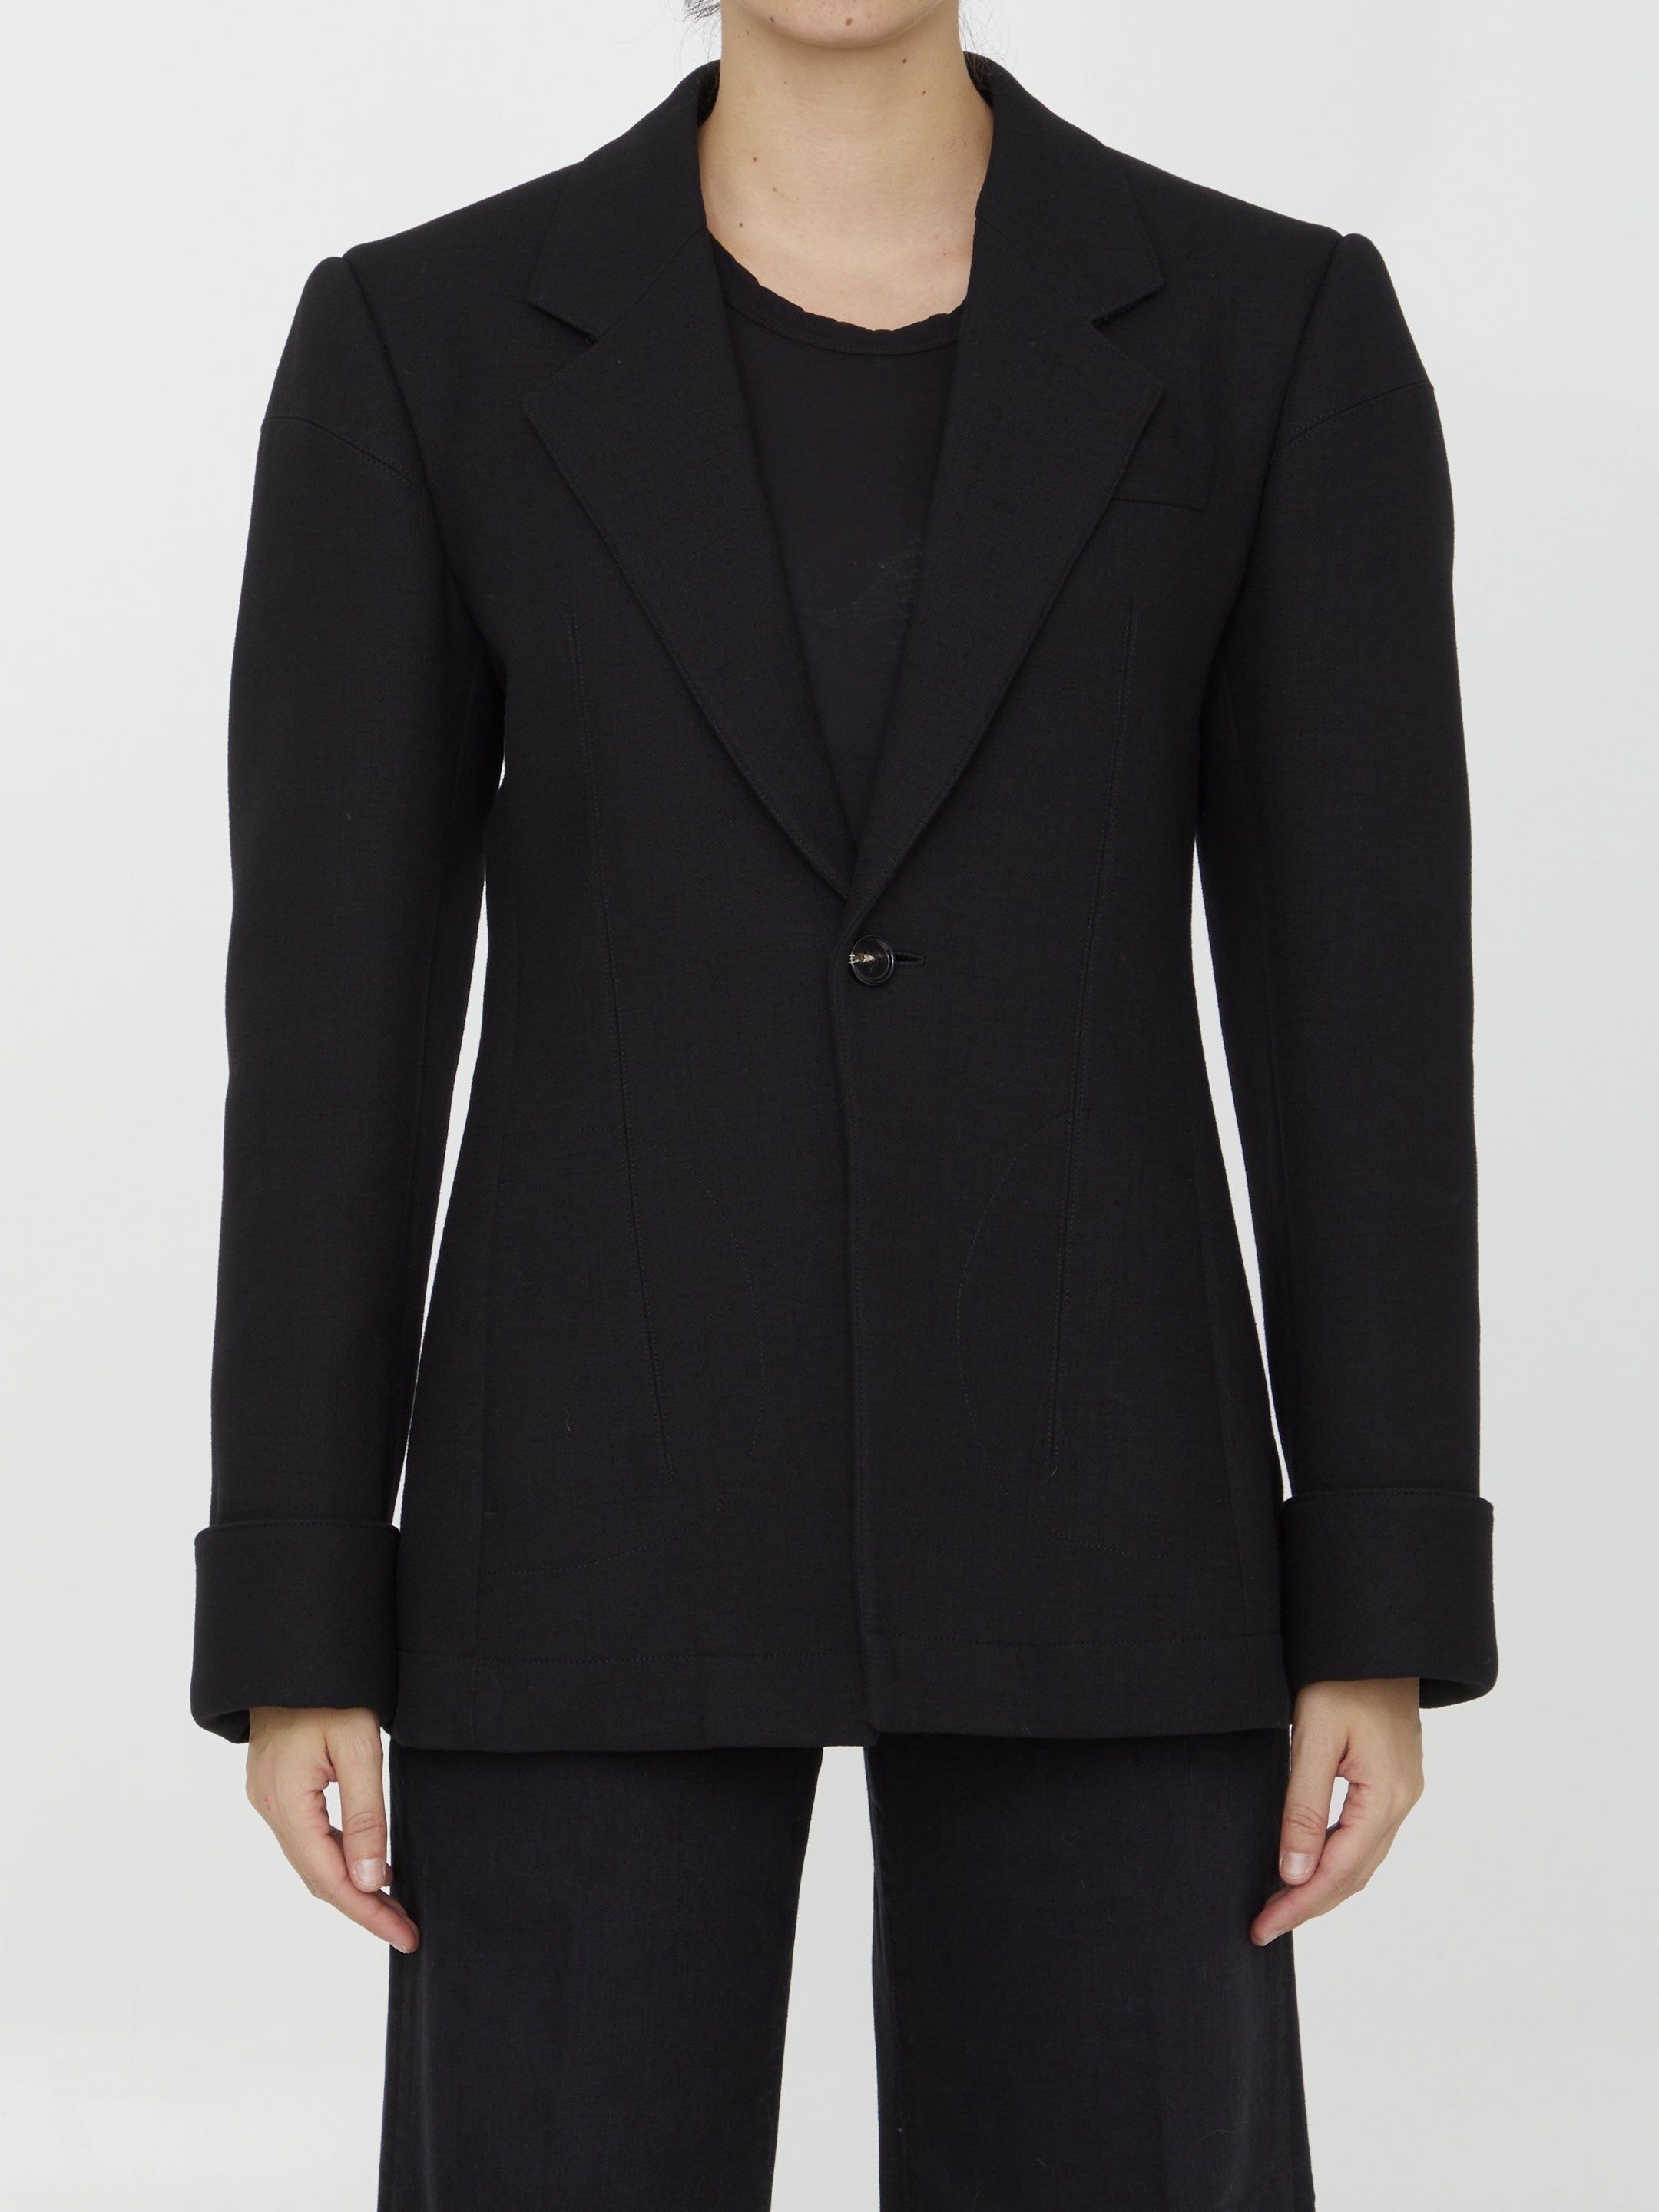 BOTTEGA-VENETA-OUTLET-SALE-Structured-cotton-jacket-Jacken-Mantel-40-BLACK-ARCHIVE-COLLECTION.jpg